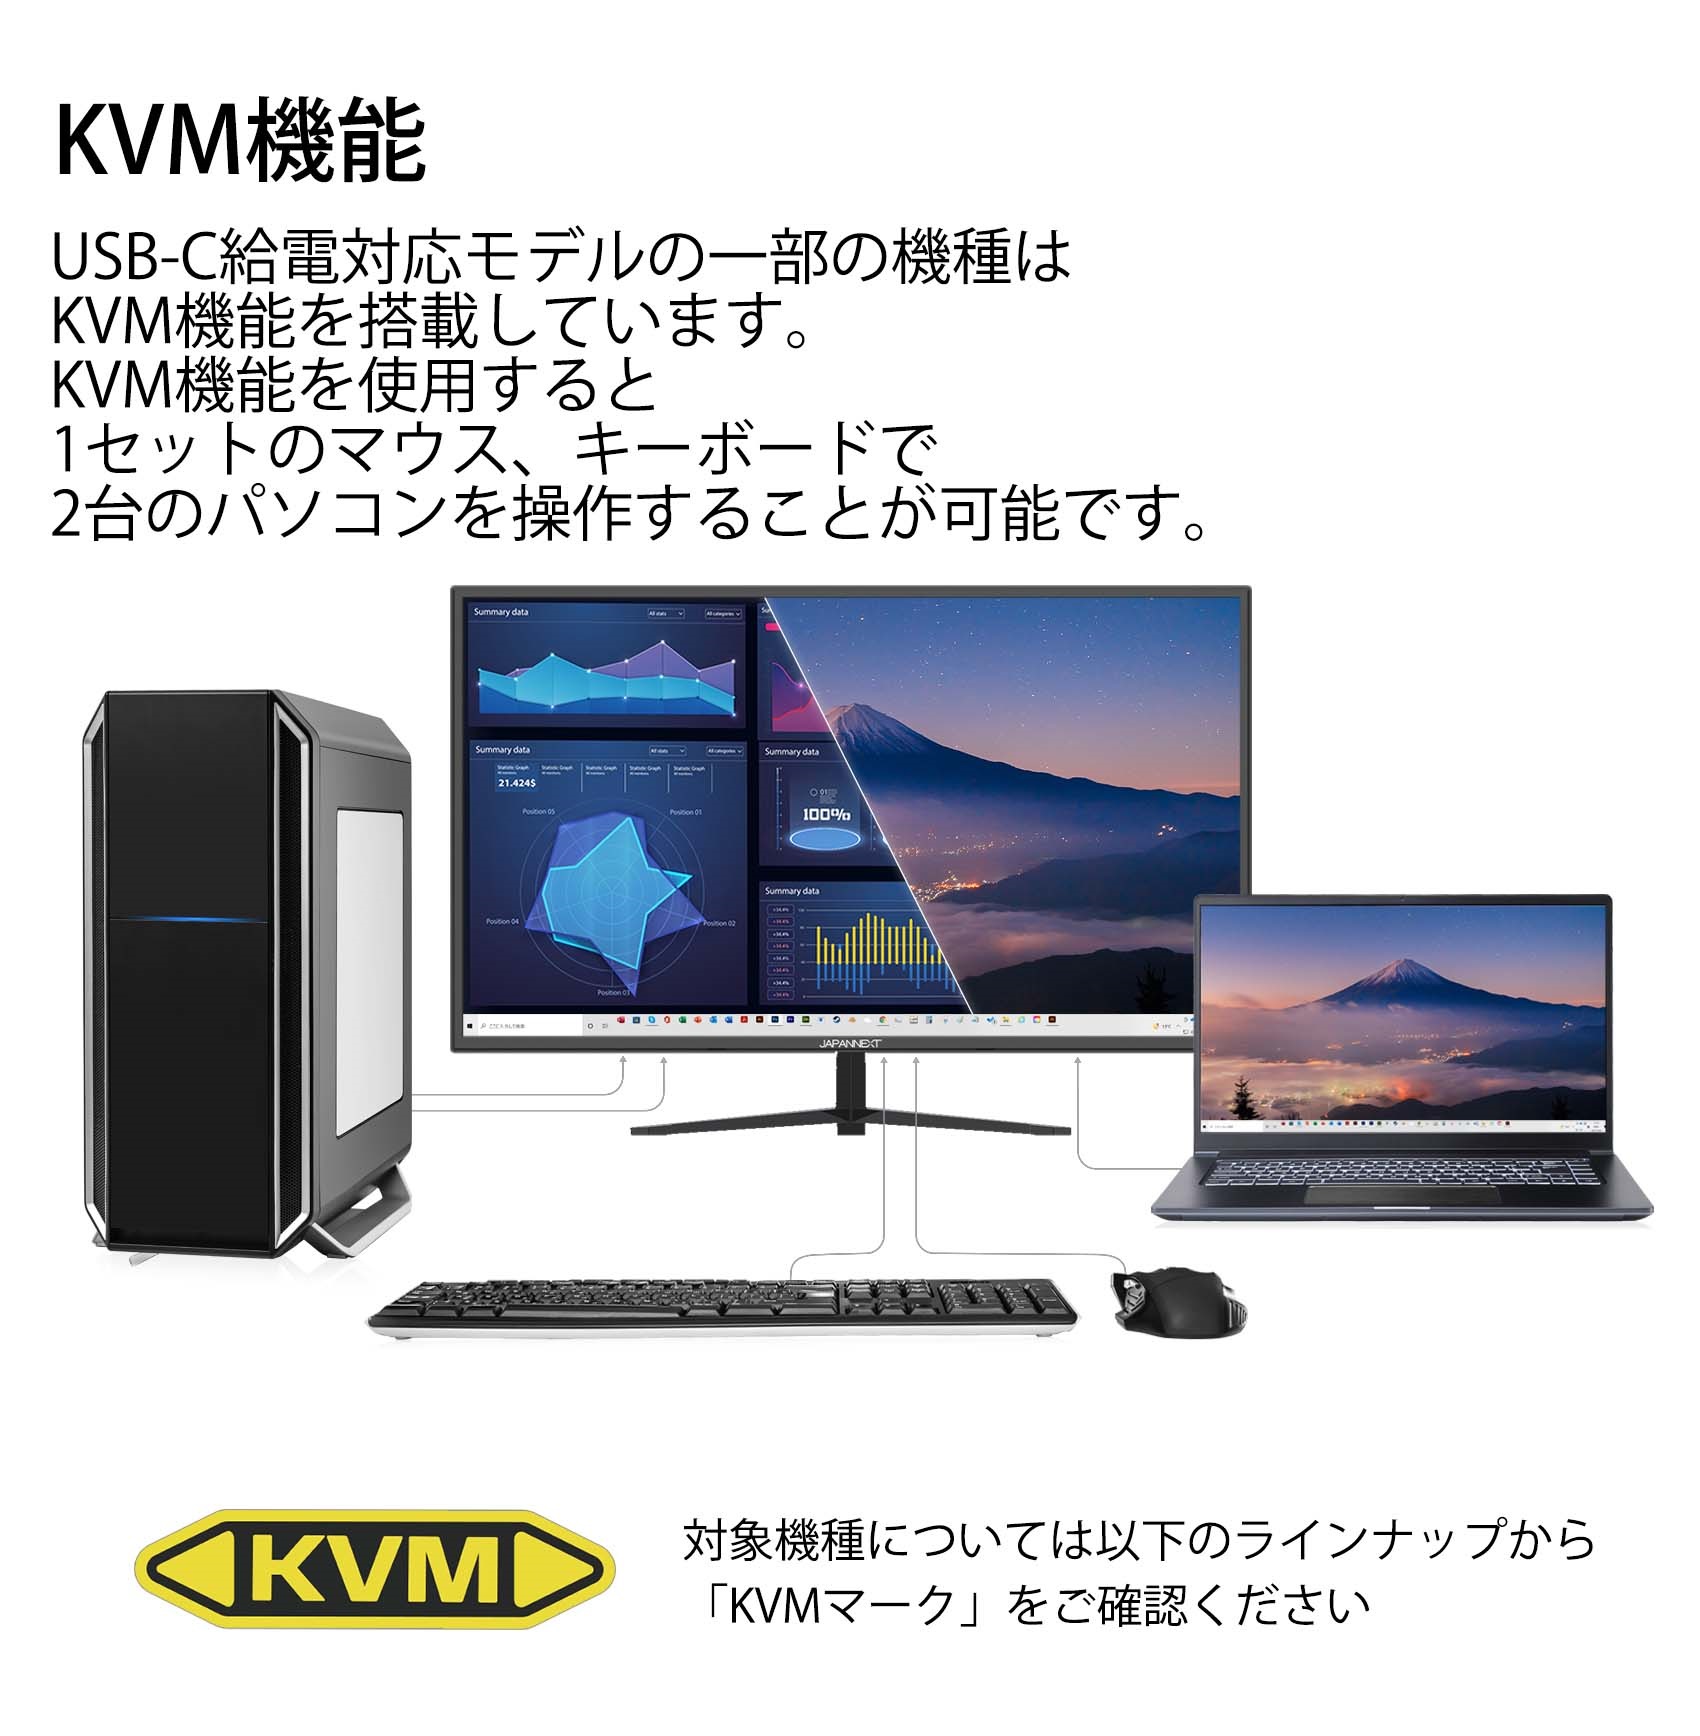 USB-C Landing page Type-C 65W 60W 給電 KVM – JAPANNEXT 4K WQHD など超解像度、ゲーミング、曲面など特殊液晶モニター